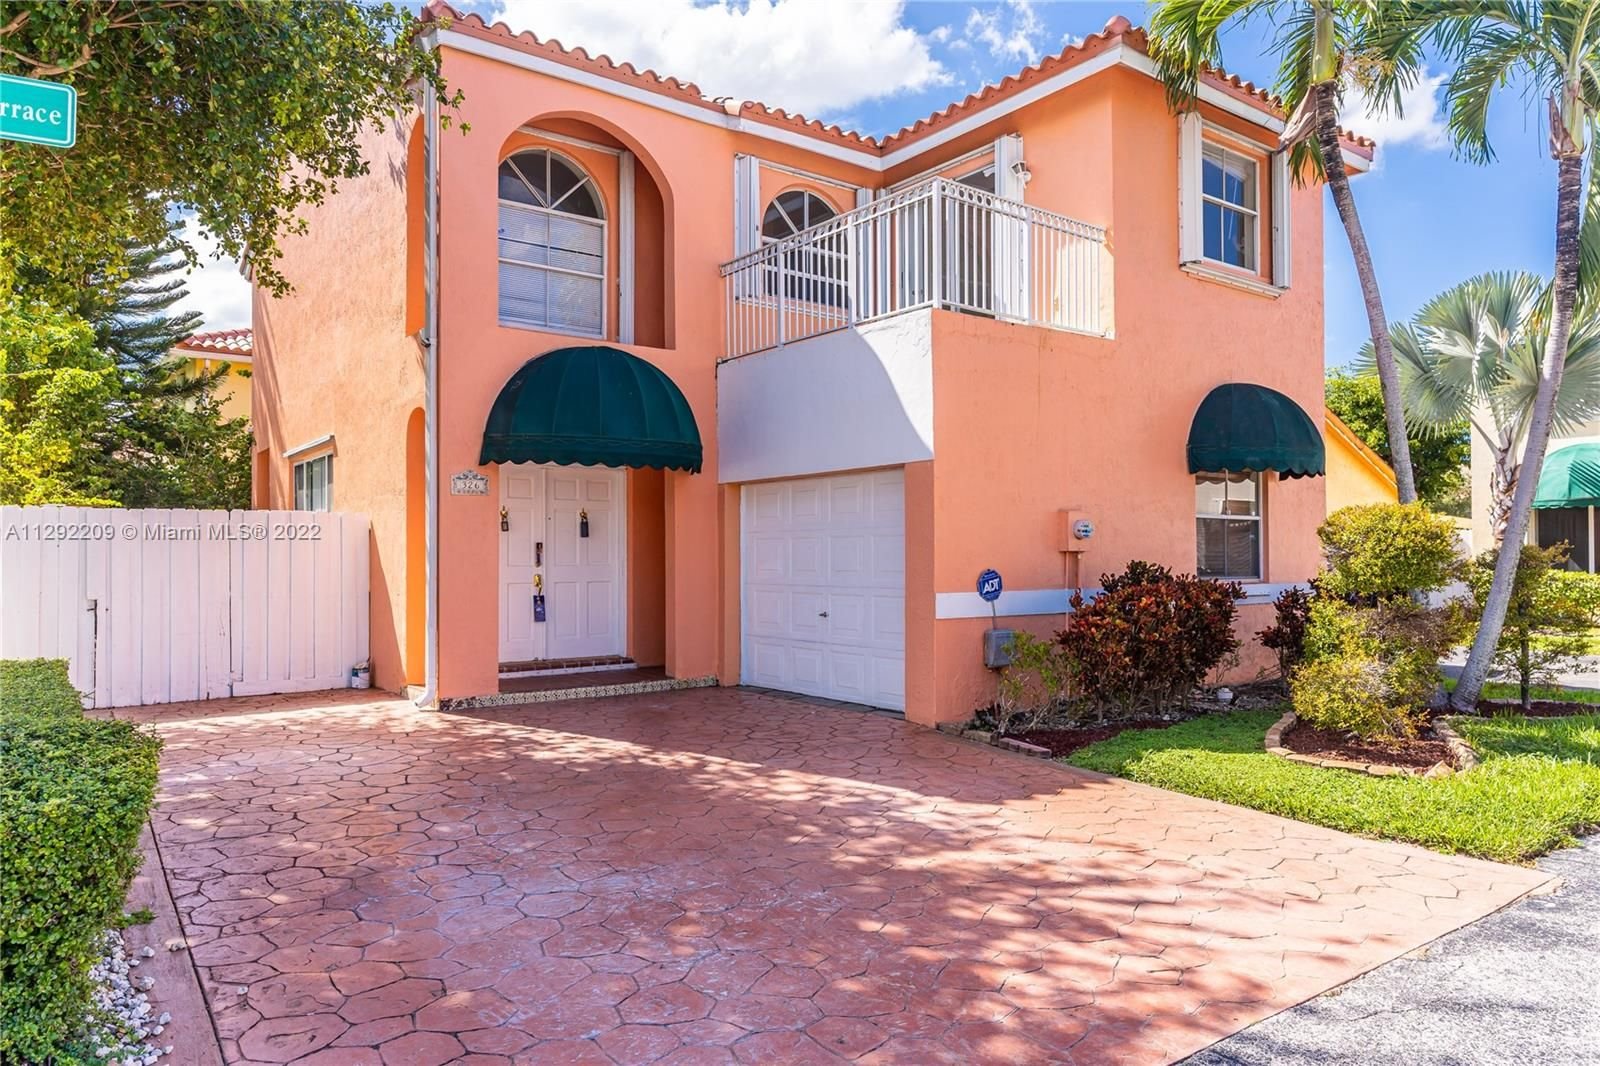 Real estate property located at 326 86th Ct, Miami-Dade County, Miami, FL